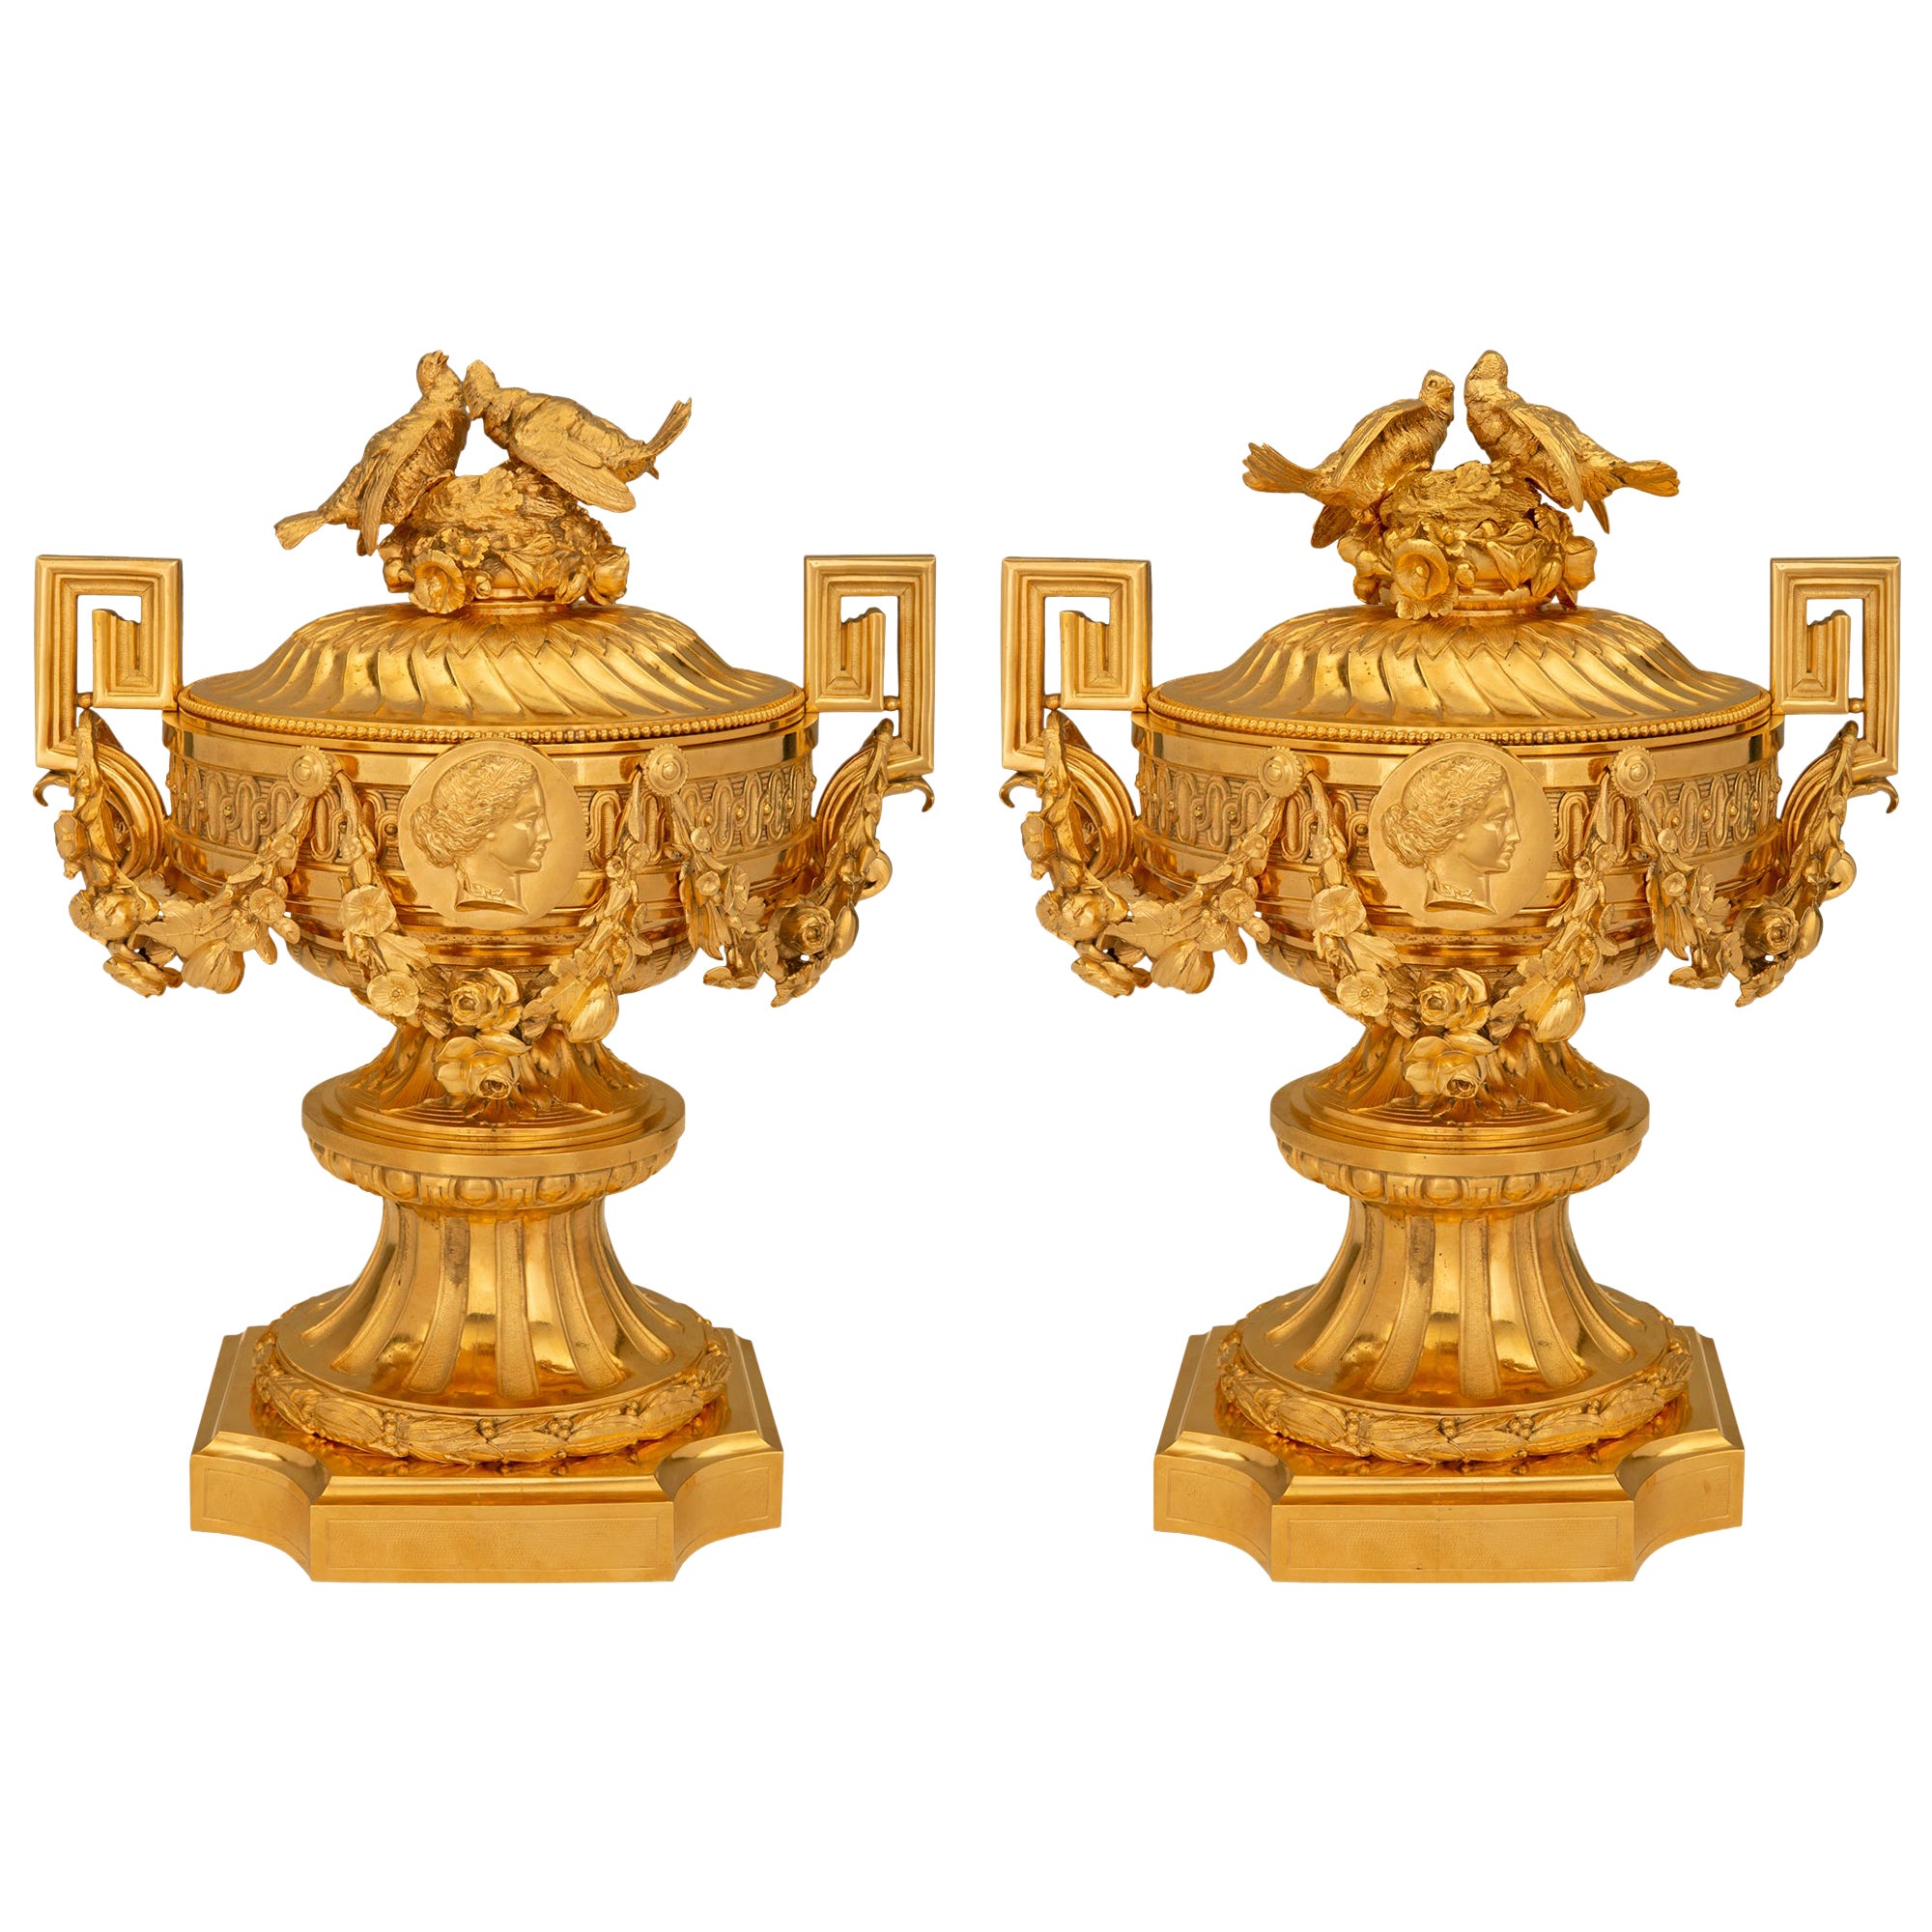 Pair of French 19th Century Napoleon III Period Ormolu Lidded Urns